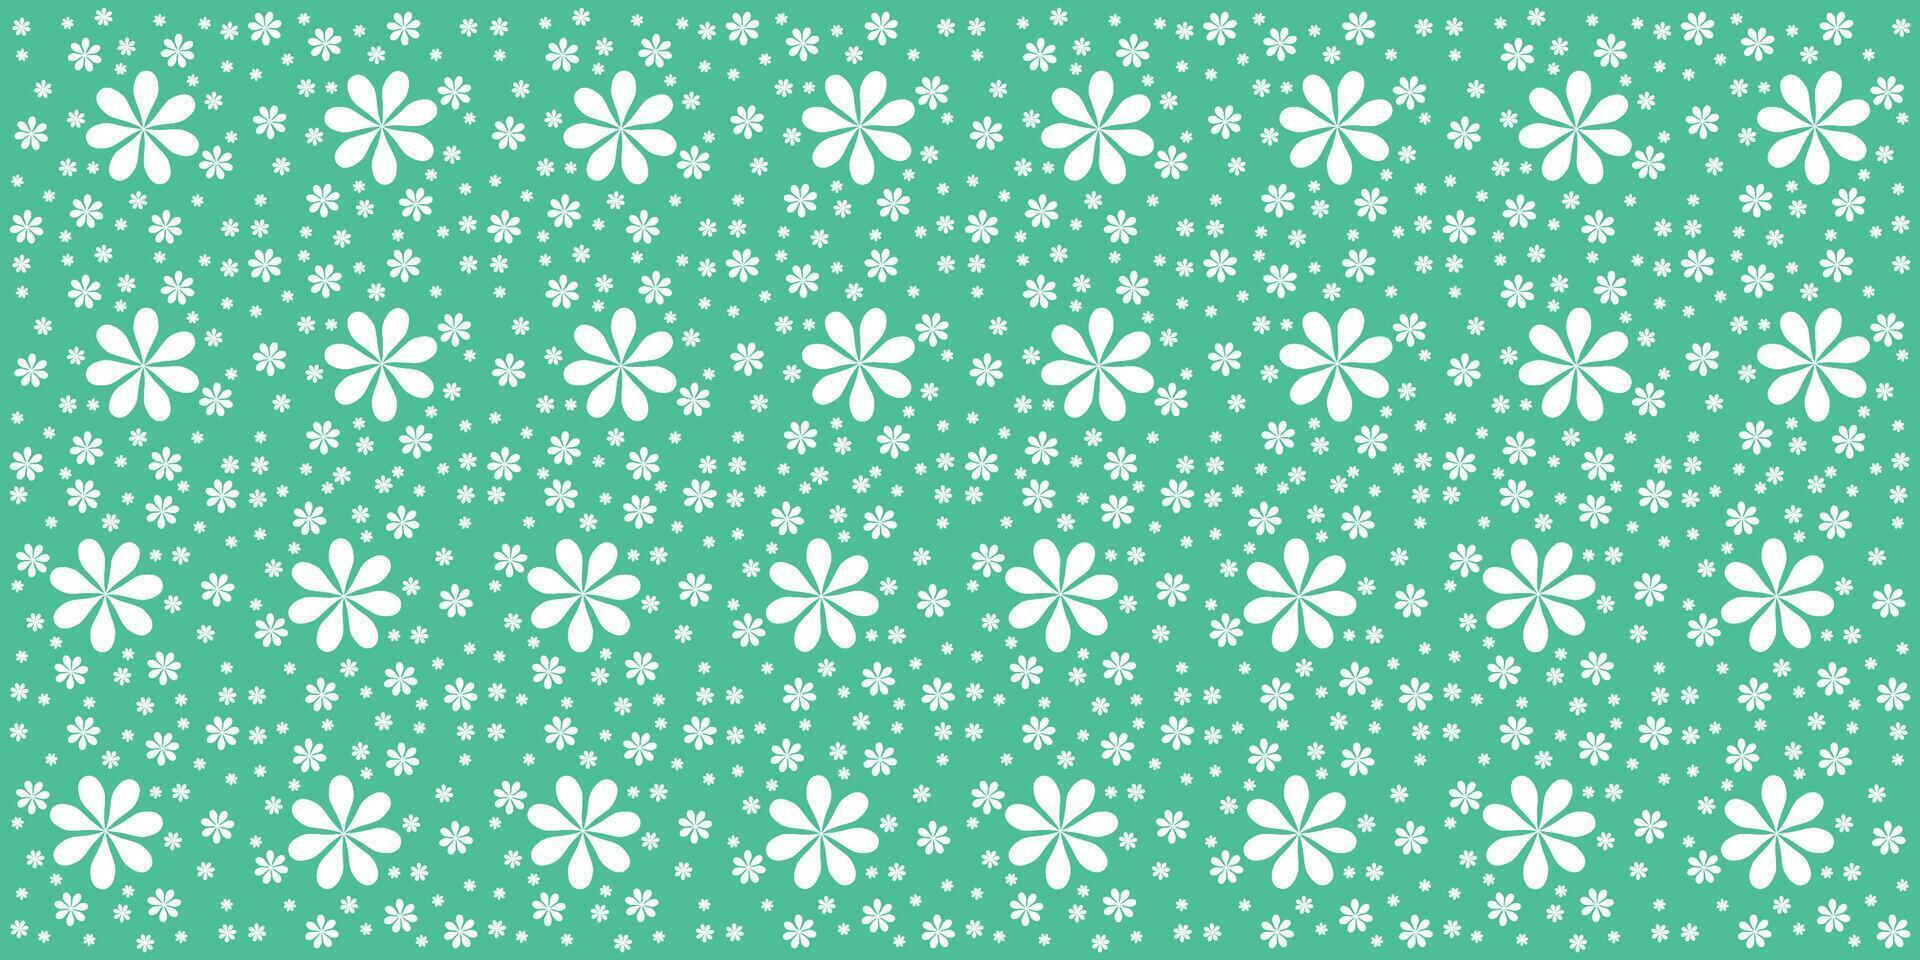 flower pattern design seamless drawing vector